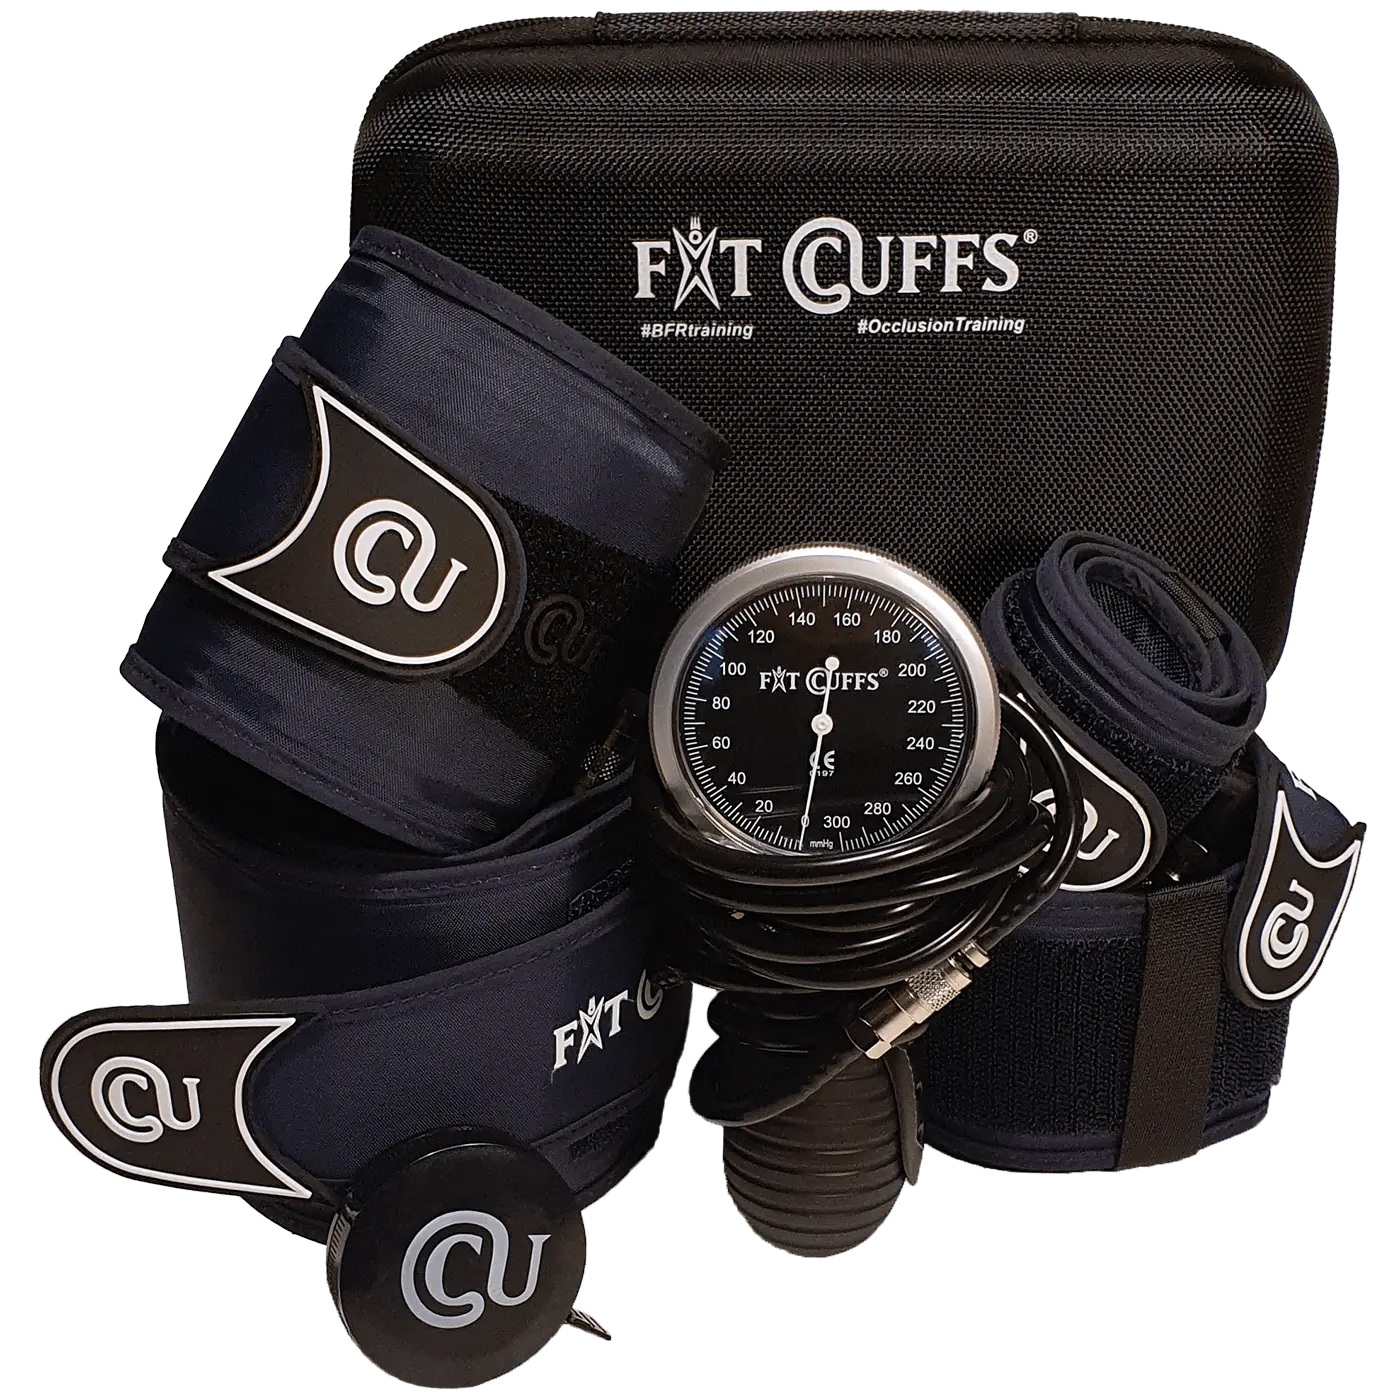 Se Fit Cuffs - Complete Hard Case - Fit Manometer Wireless hos Fitcuffs.com